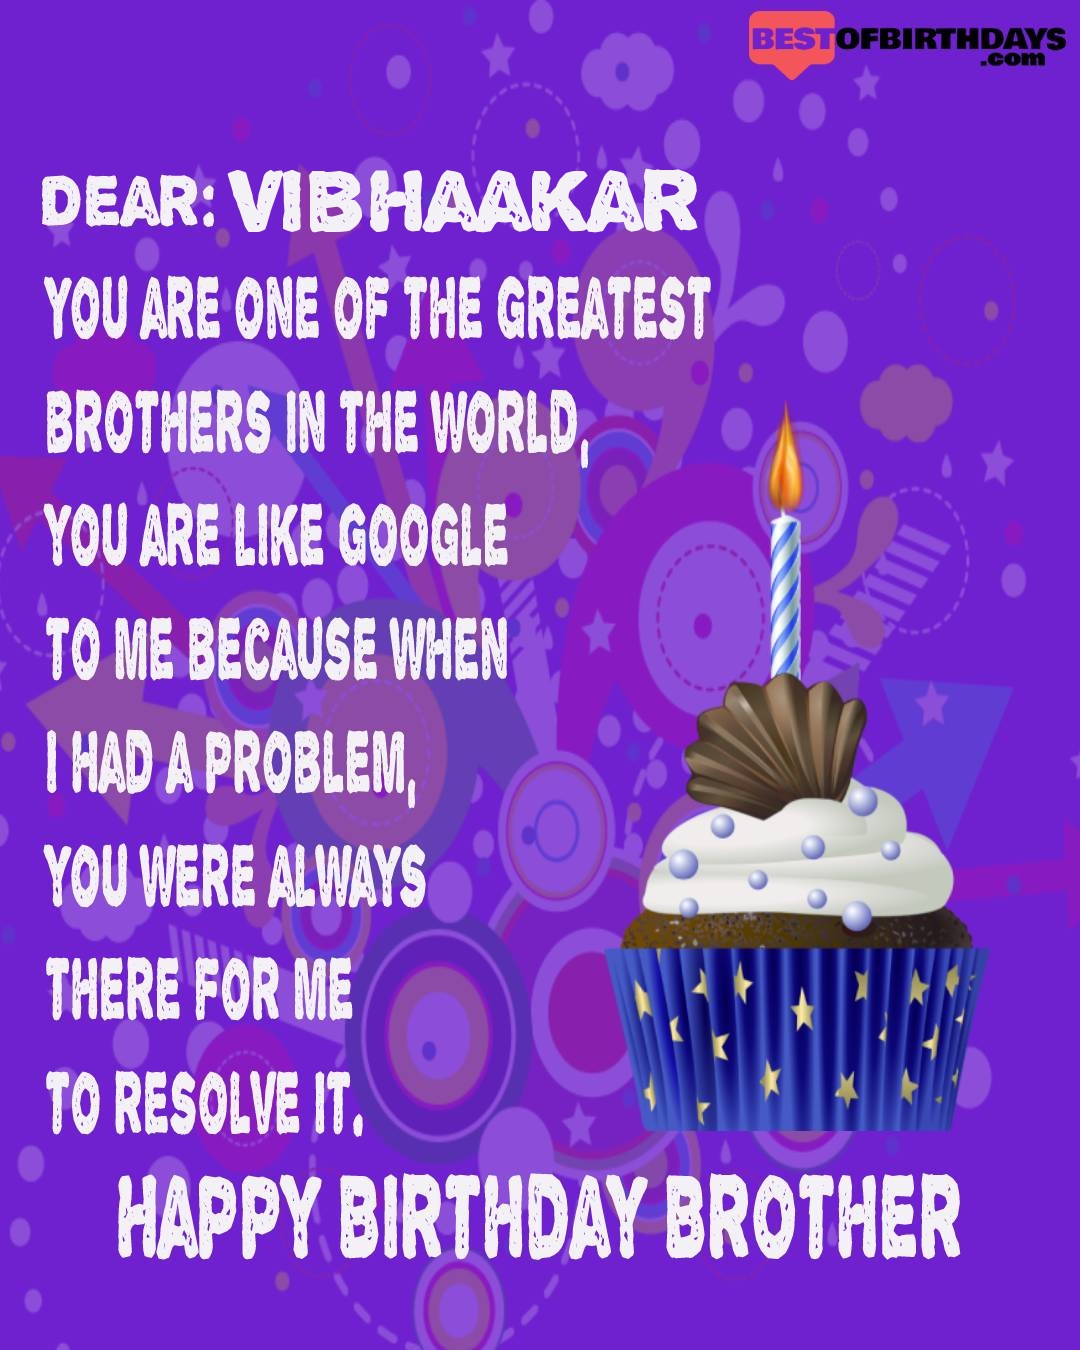 Happy birthday vibhaakar bhai brother bro